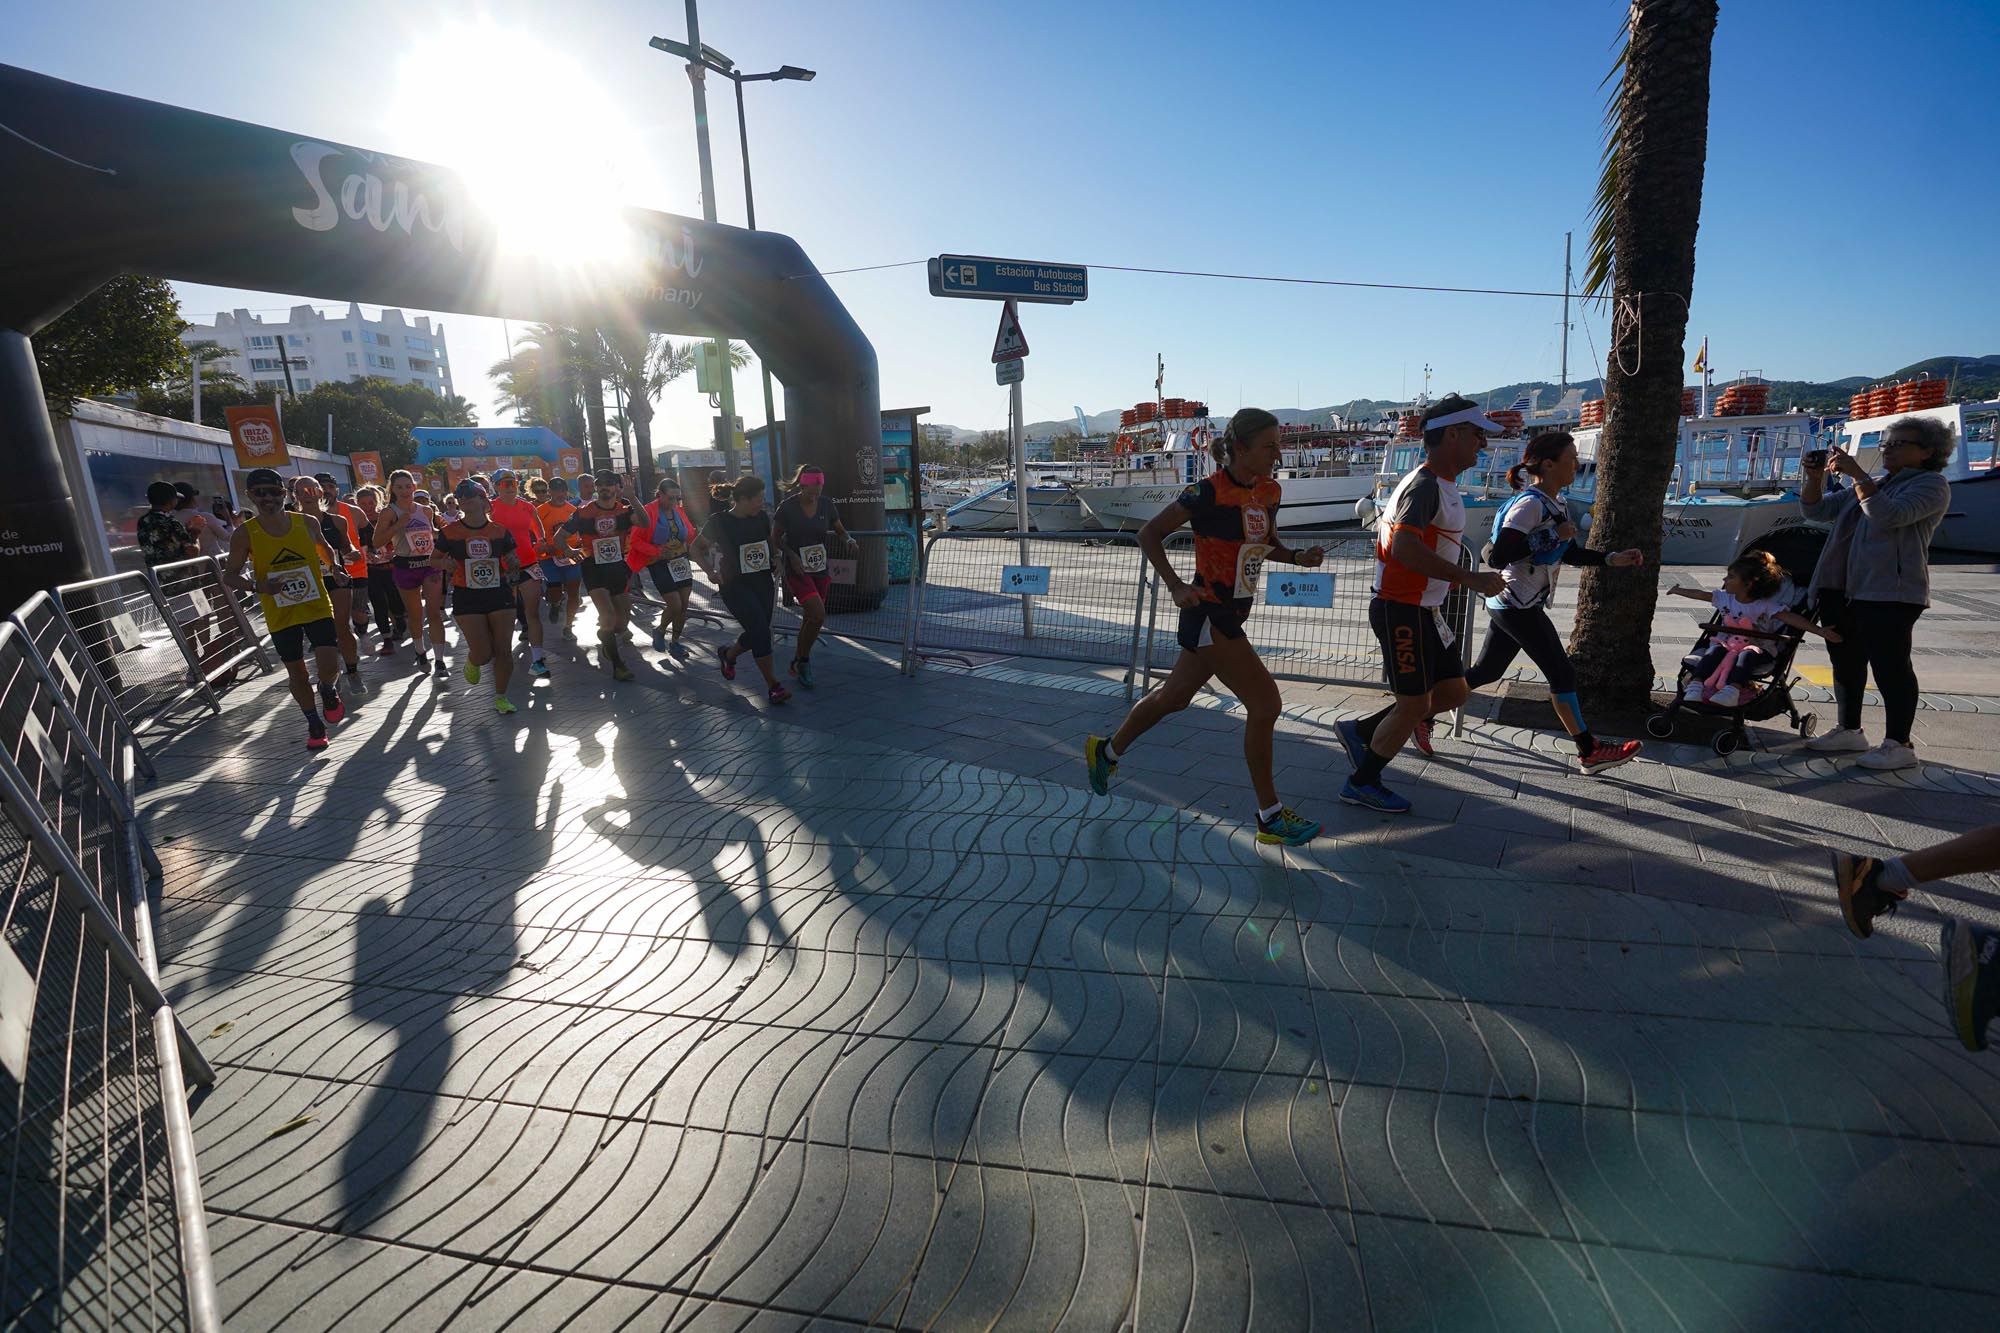 Ibiza Trail Maratón Festival, en imágenes